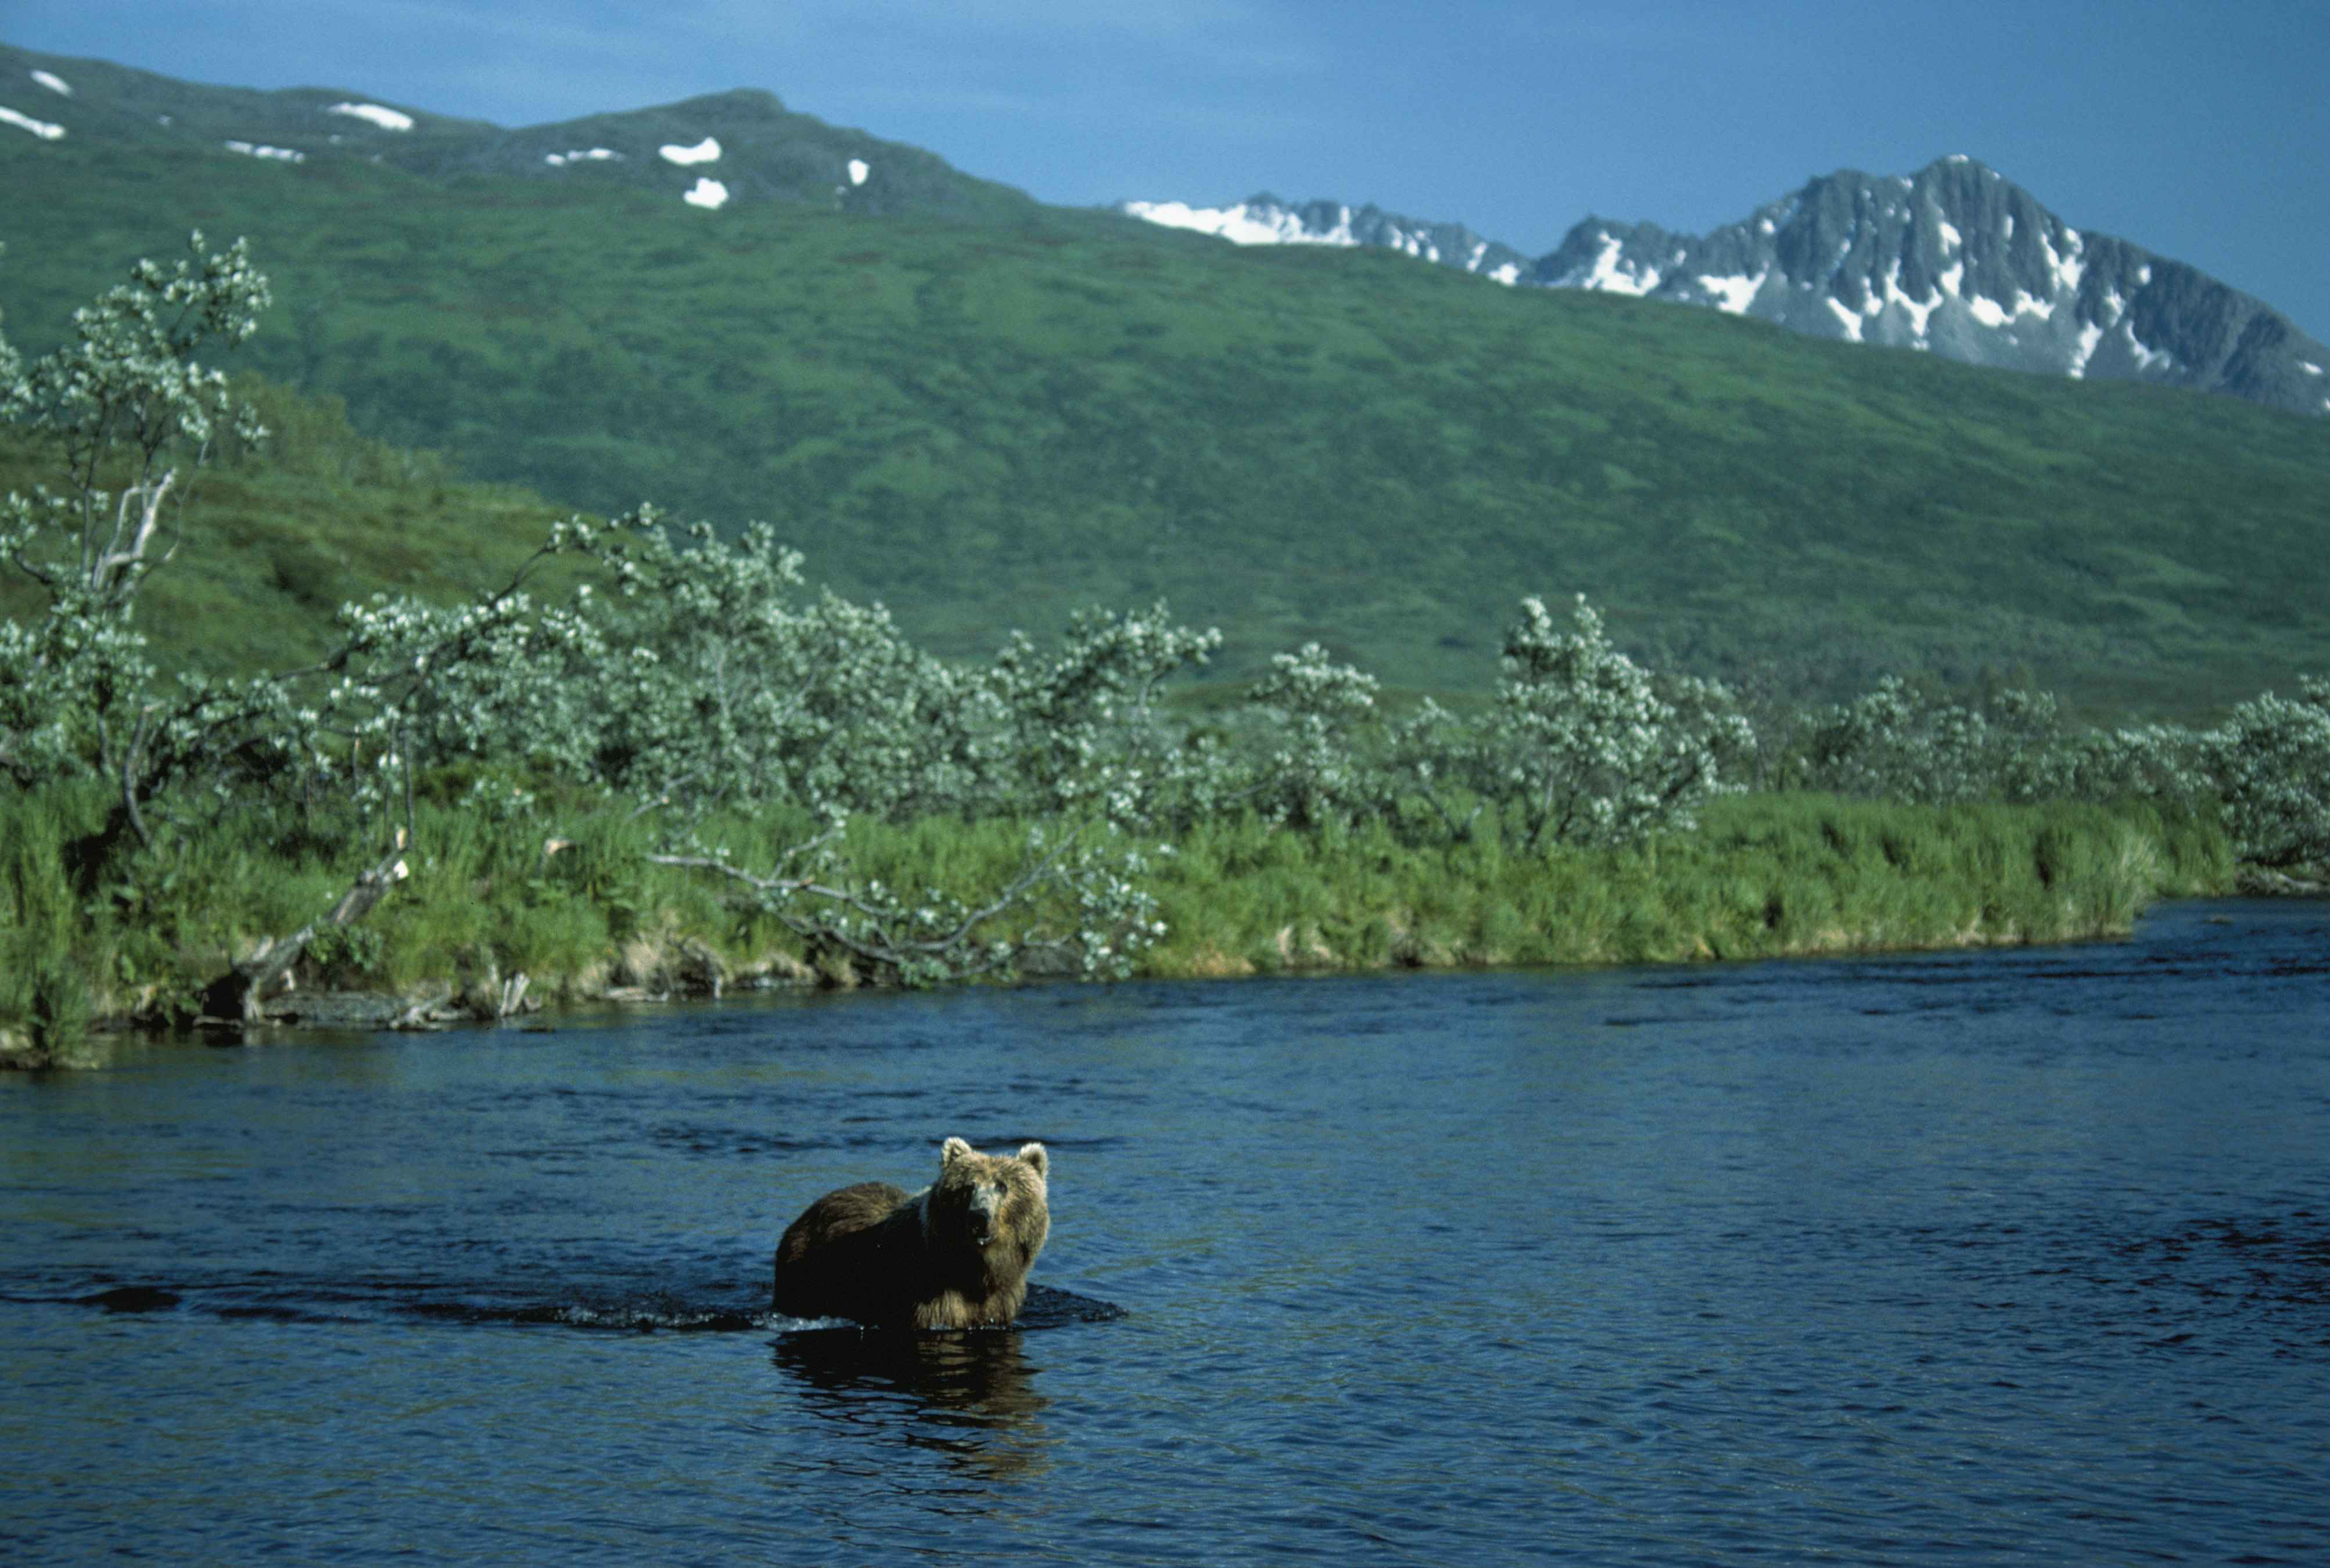 Brown bear animal in water fishing